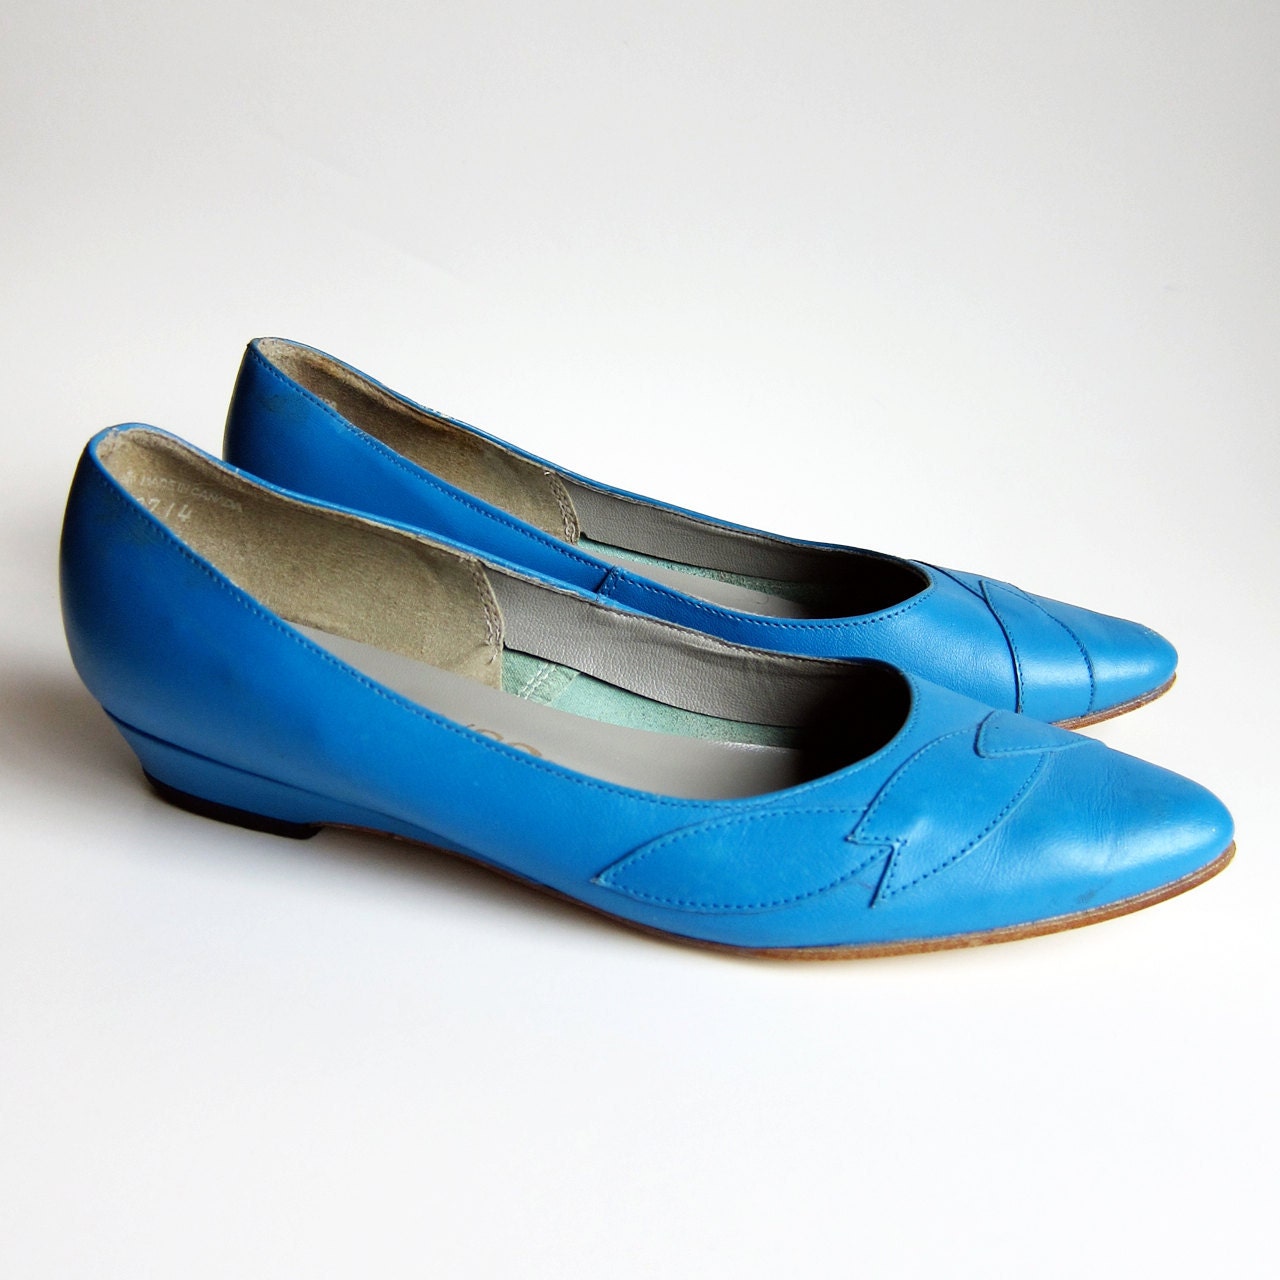 Vintage 1980s Shoes / SKY BLUE Skimmers Ballet Flats Size 7